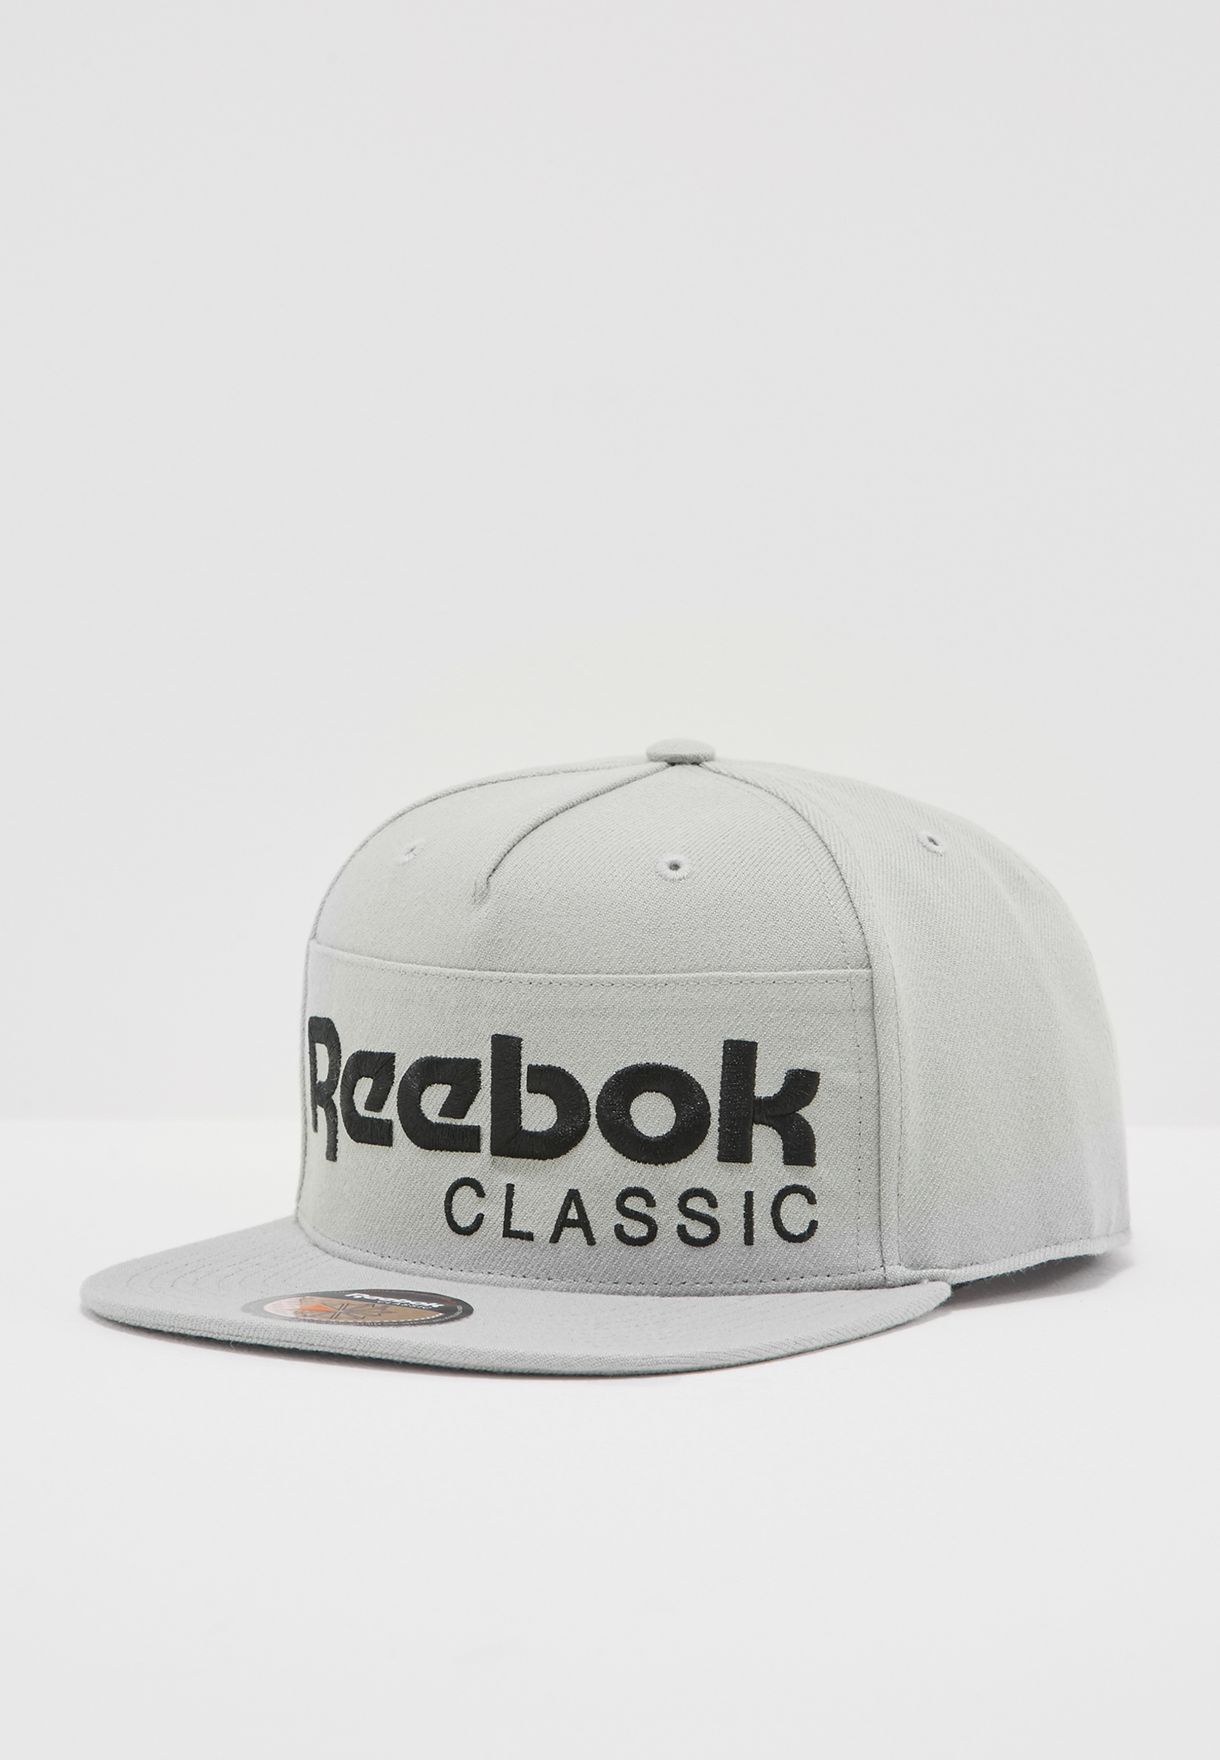 reebok classic cap grey